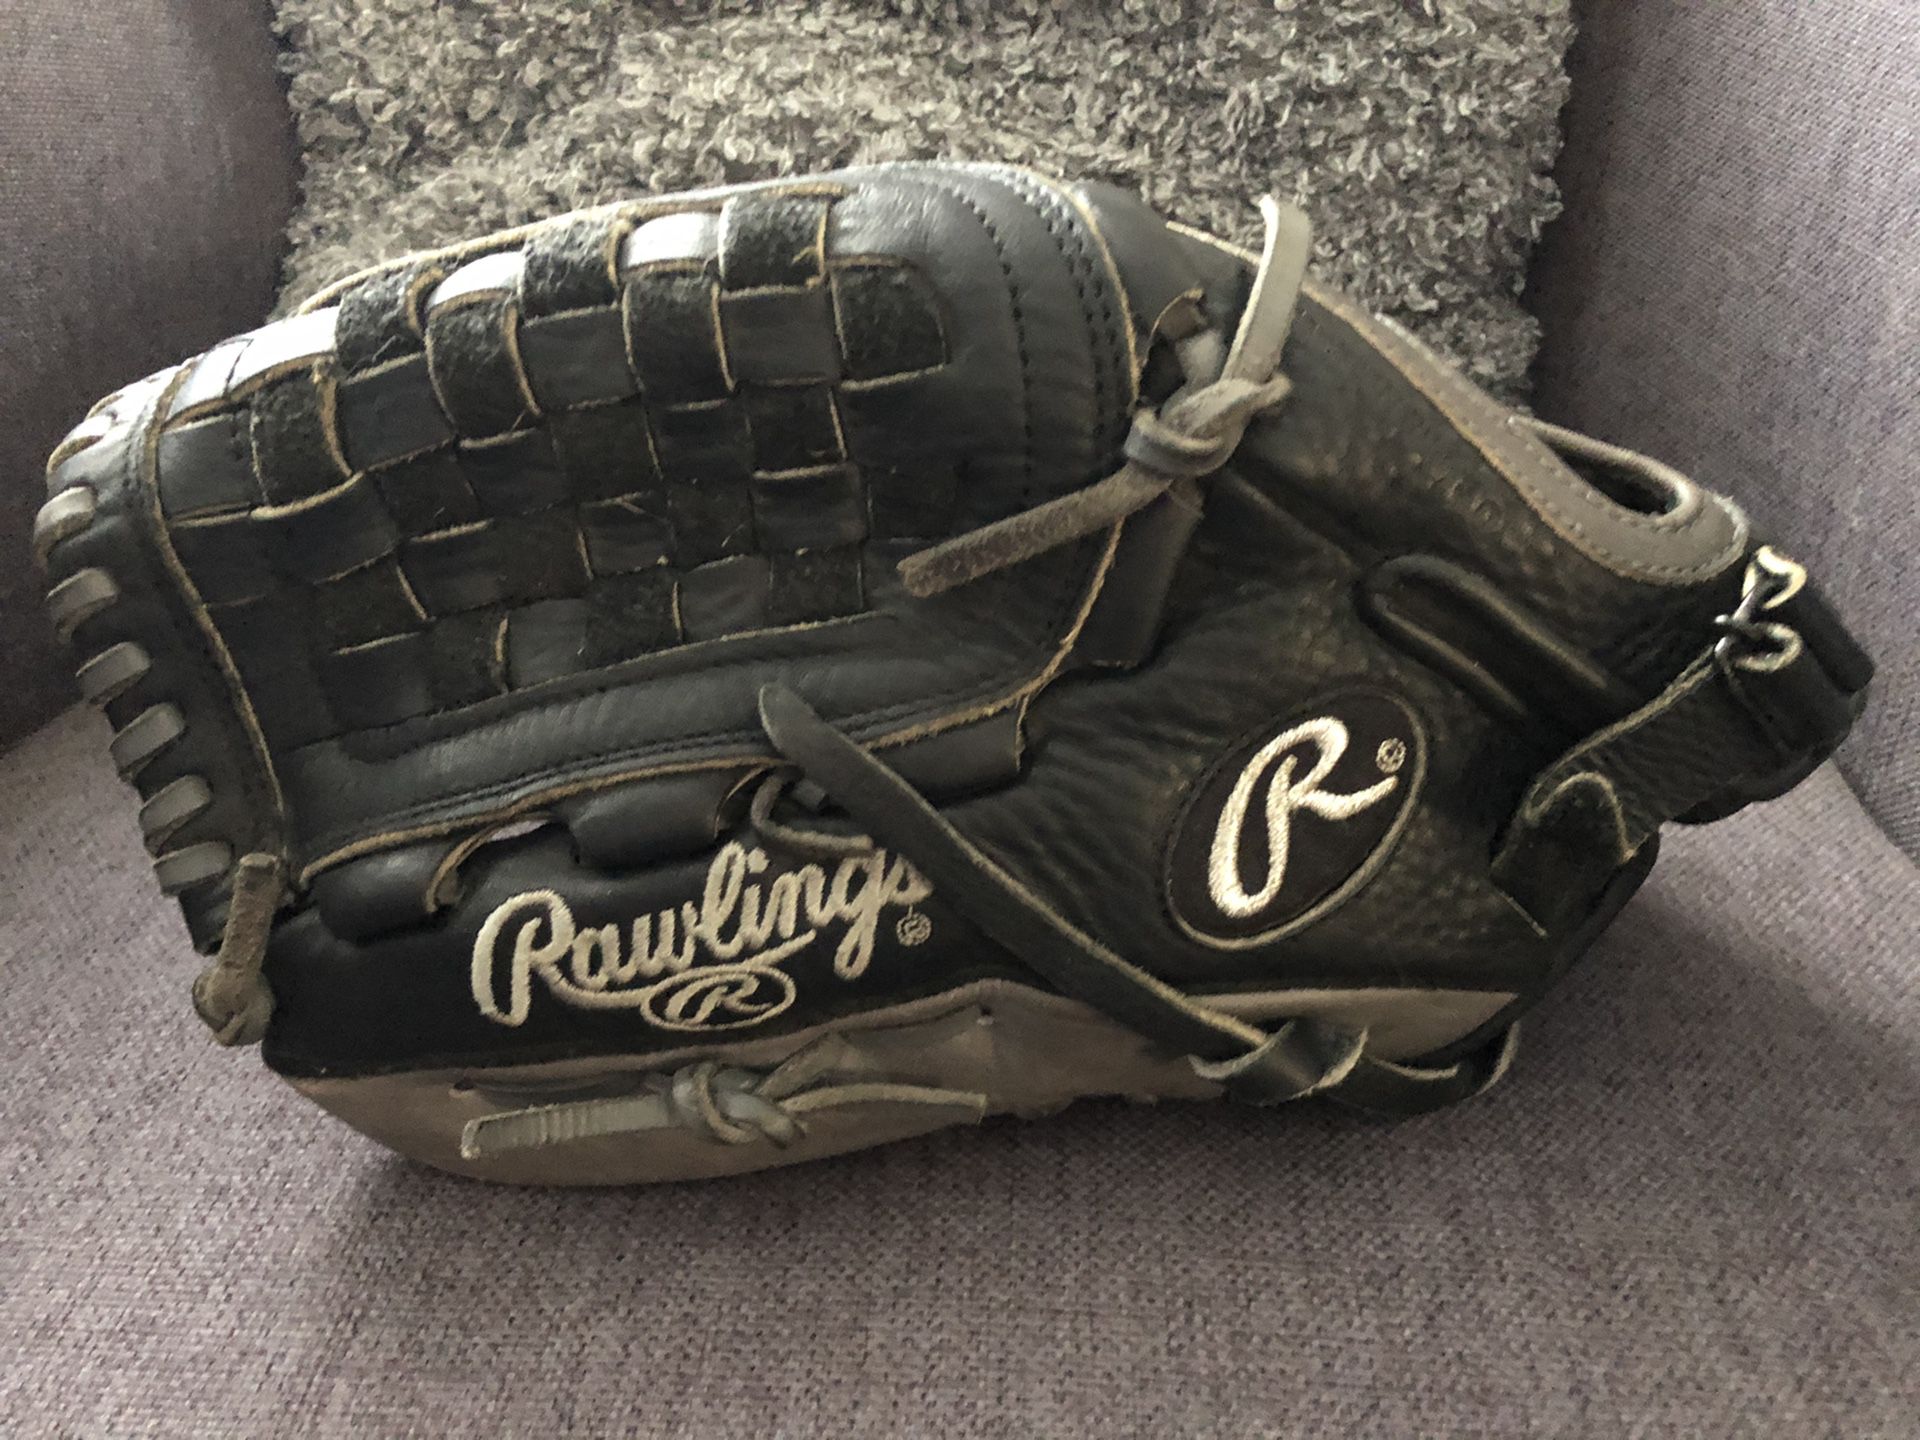 Rawlings Silverback 13” softball glove